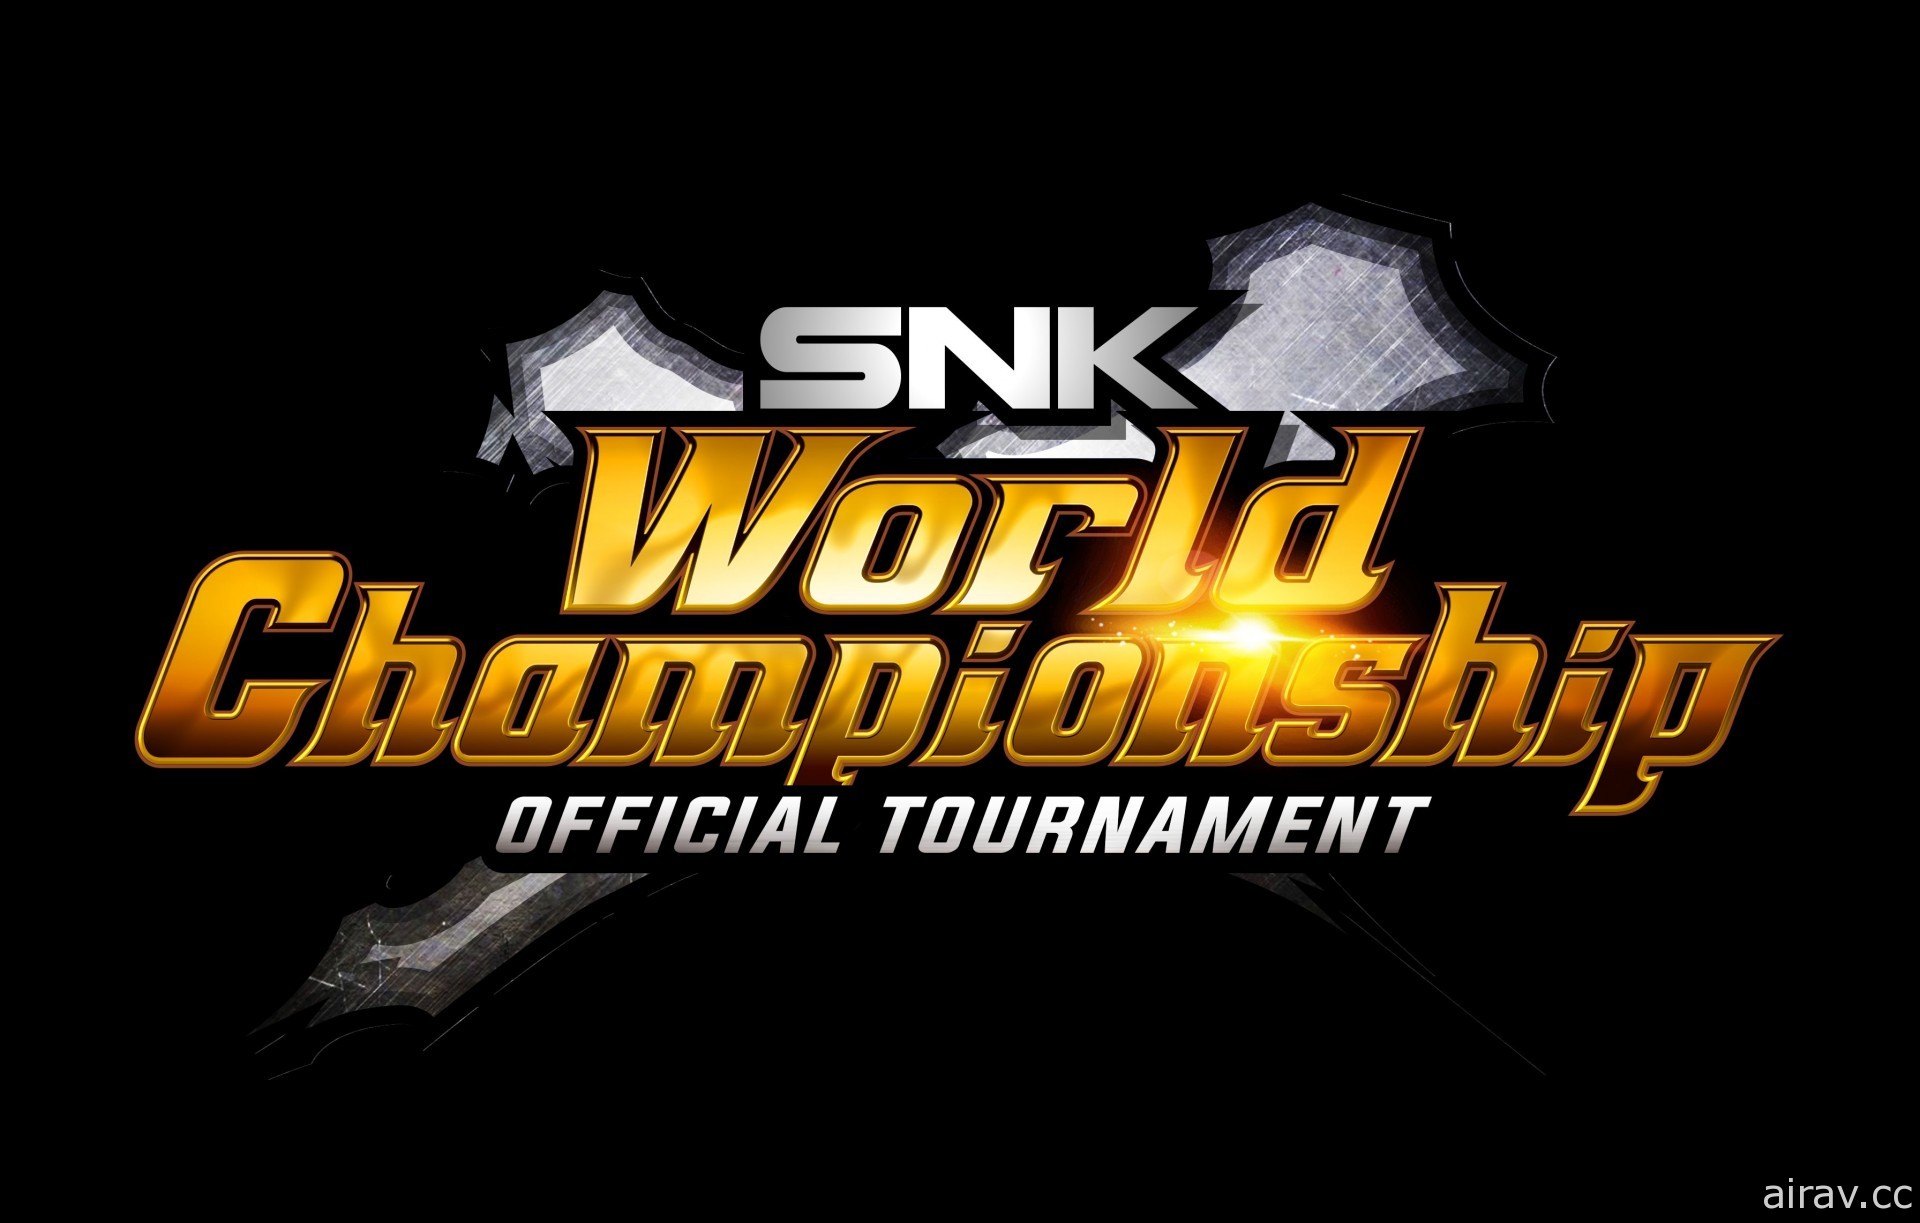 “SNK World Championship GRAND FINAL”受疫情影响 决定终止举办